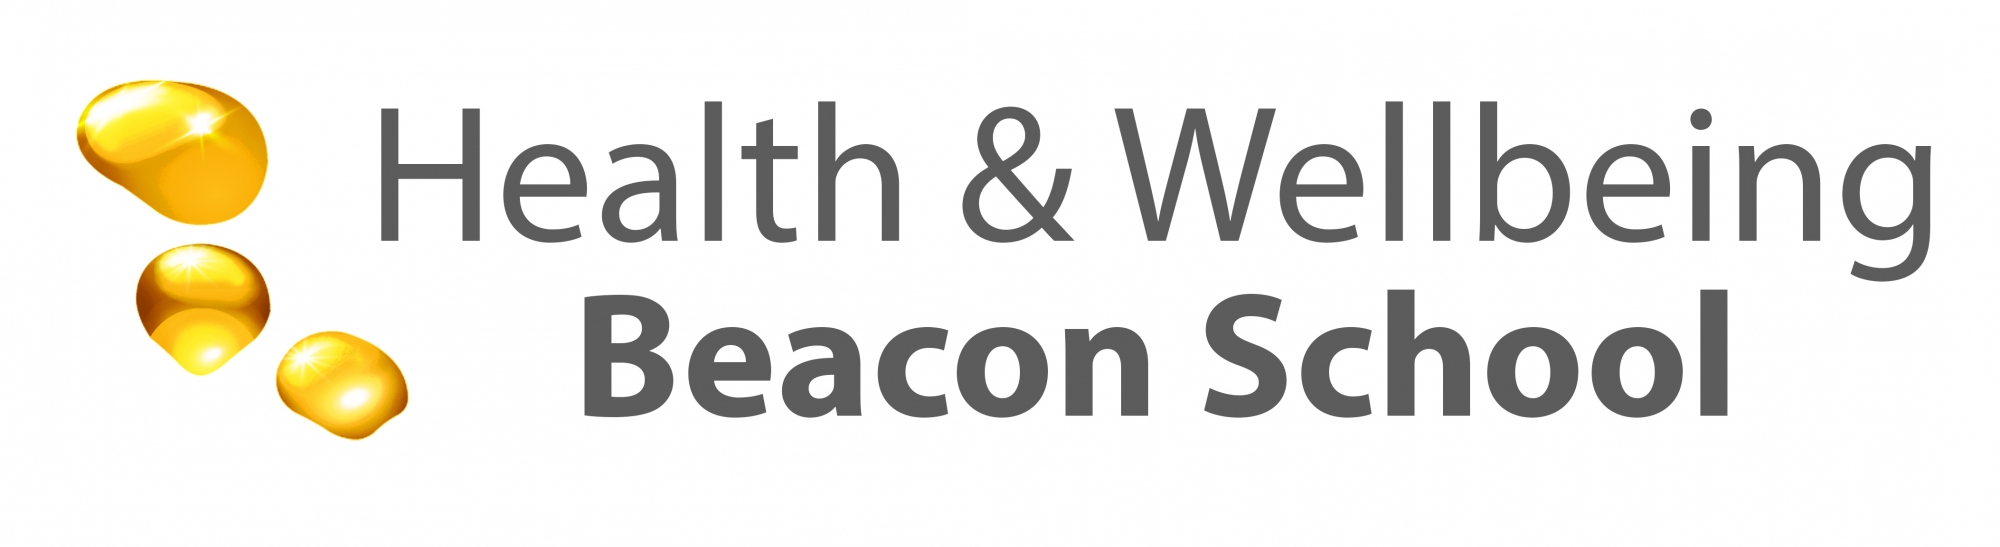 Health  Wellbeing Beacon School logo